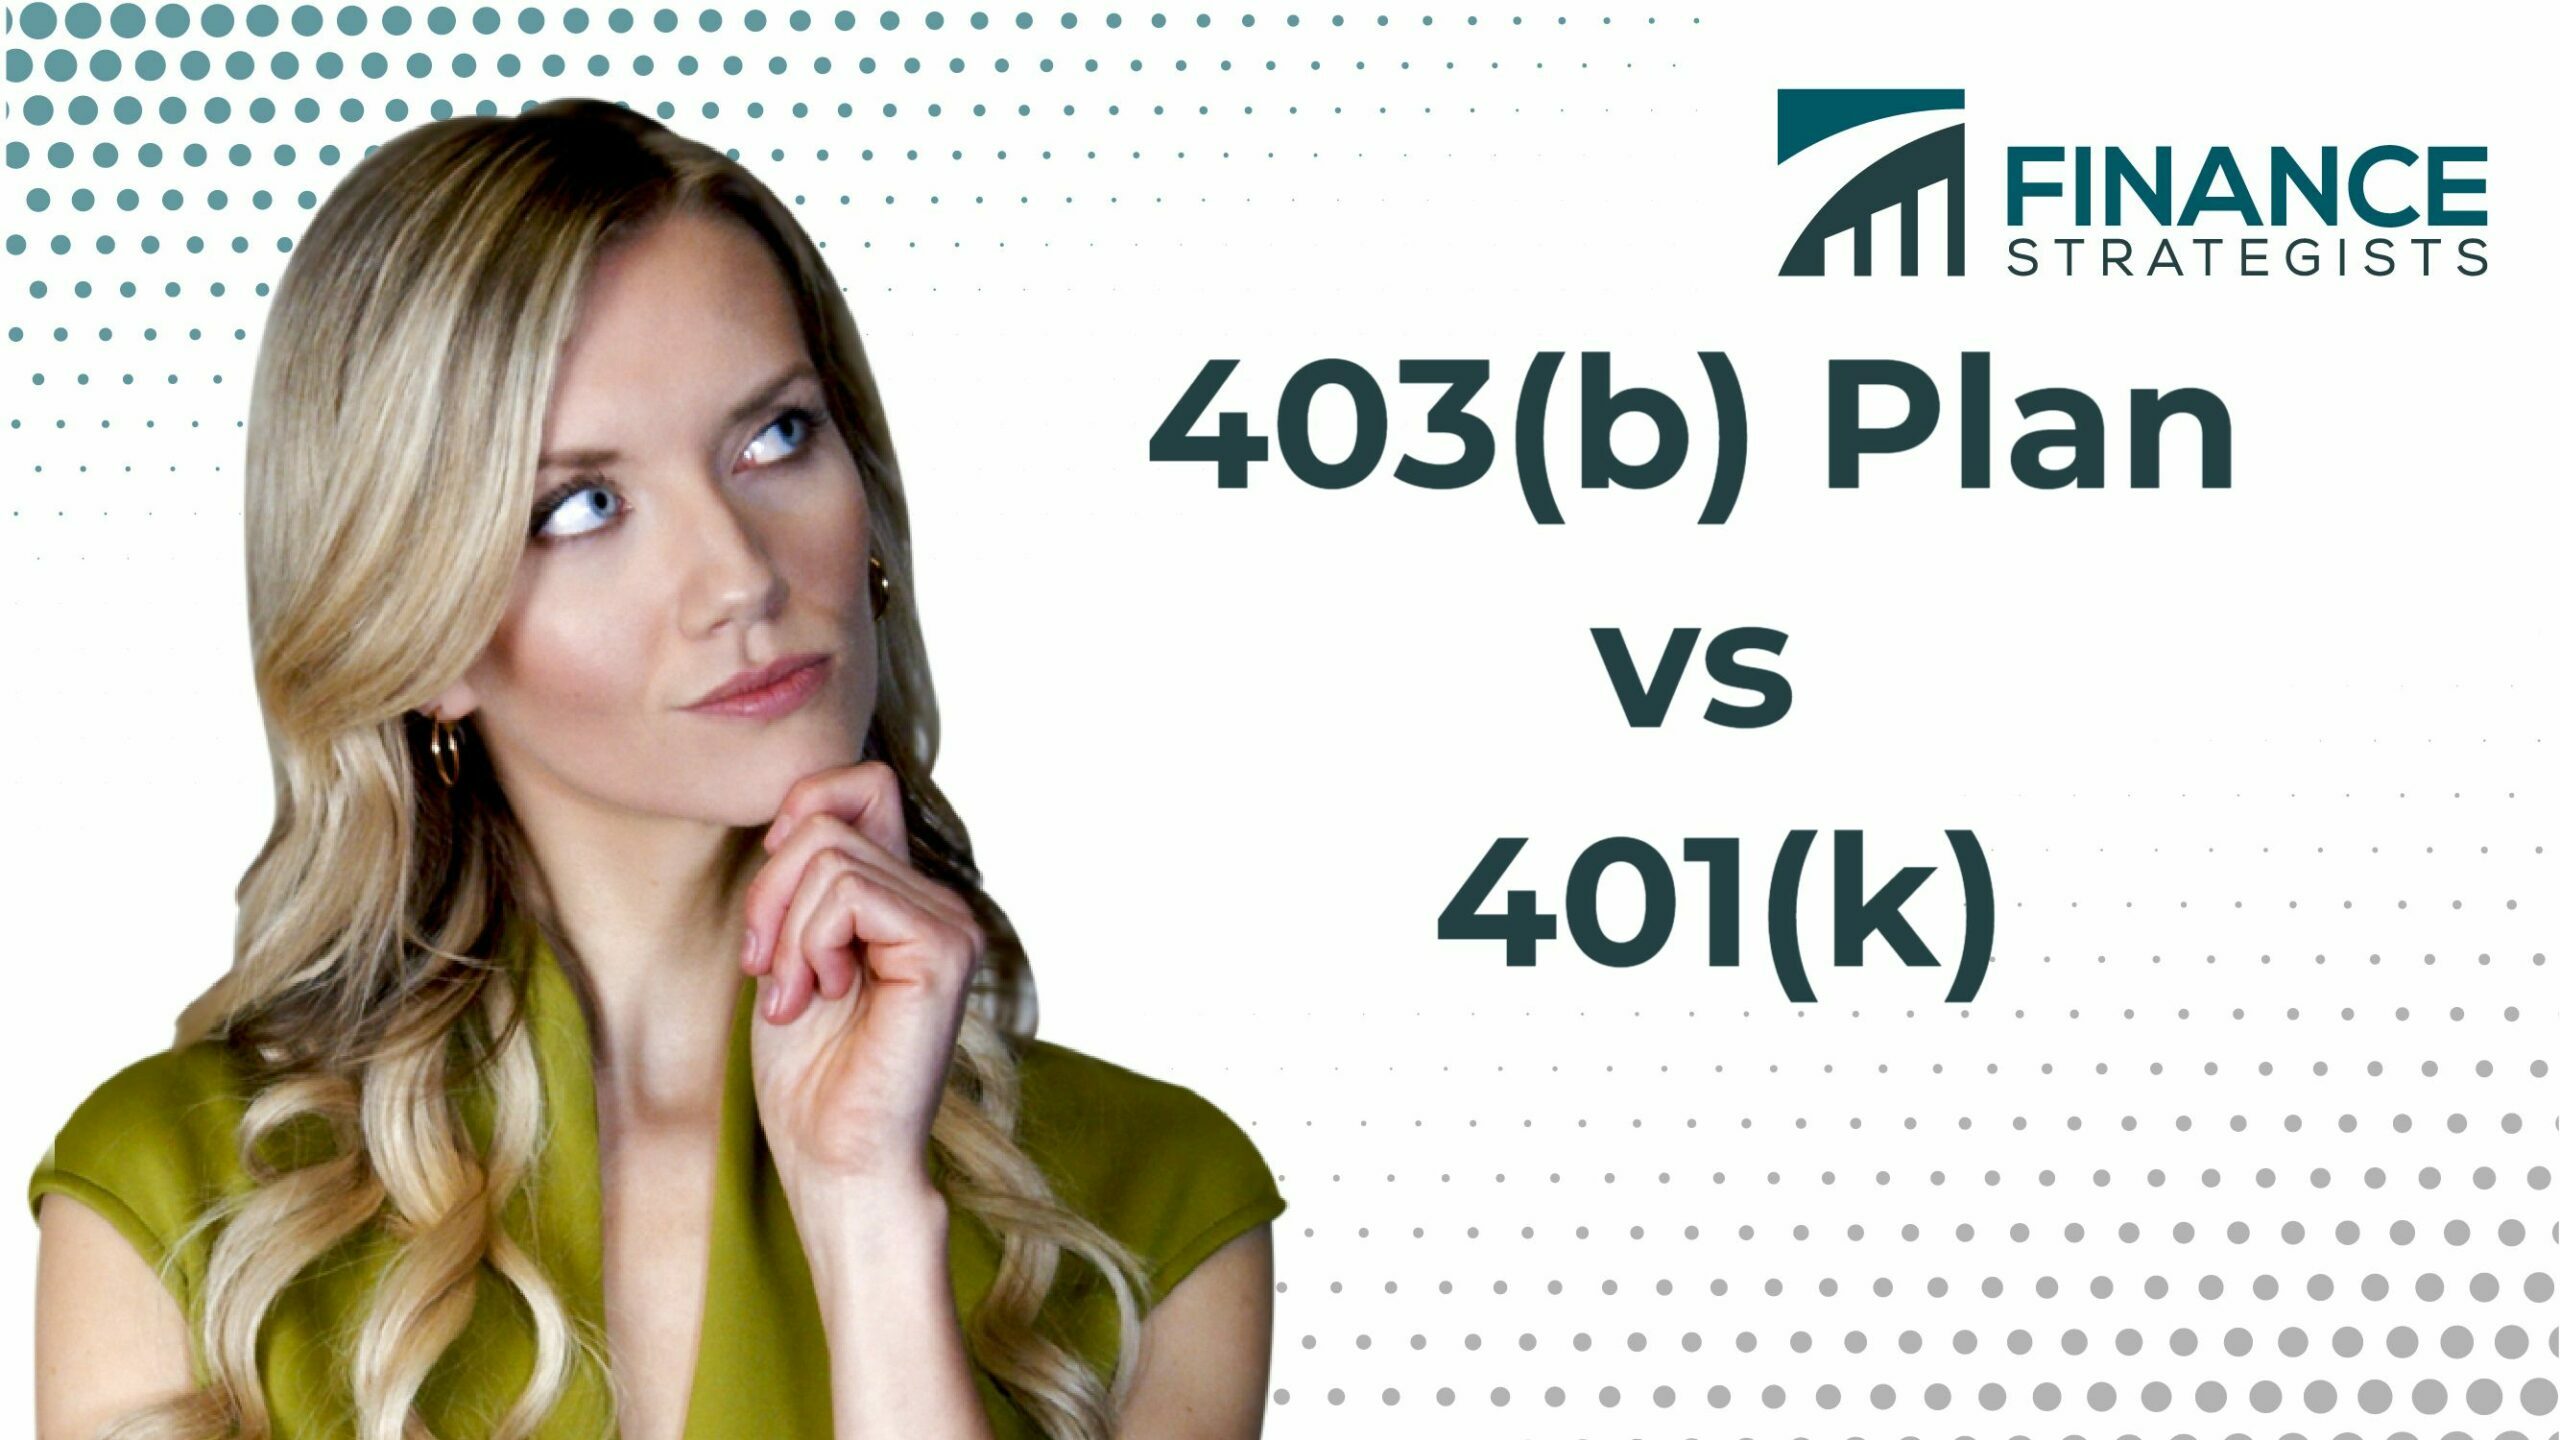 Planes 401(k) versus planes 403(b)